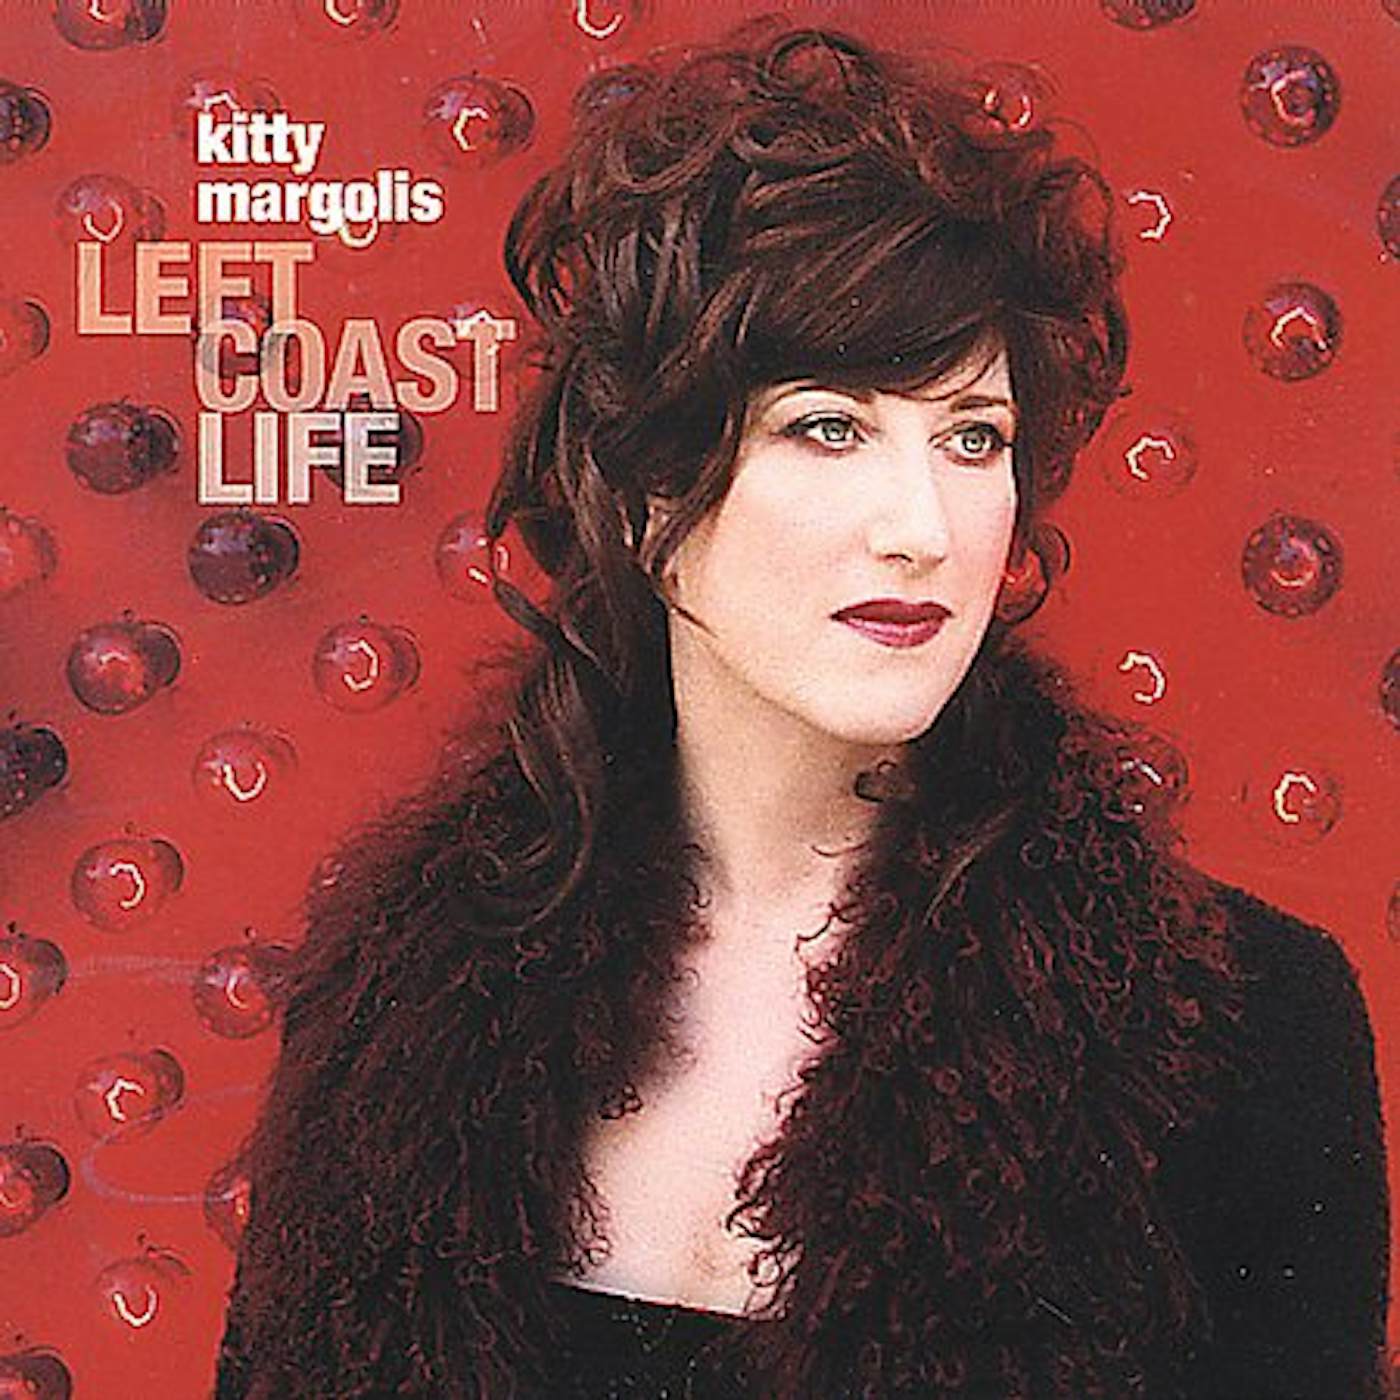 Kitty Margolis LEFT COAST LIFE CD